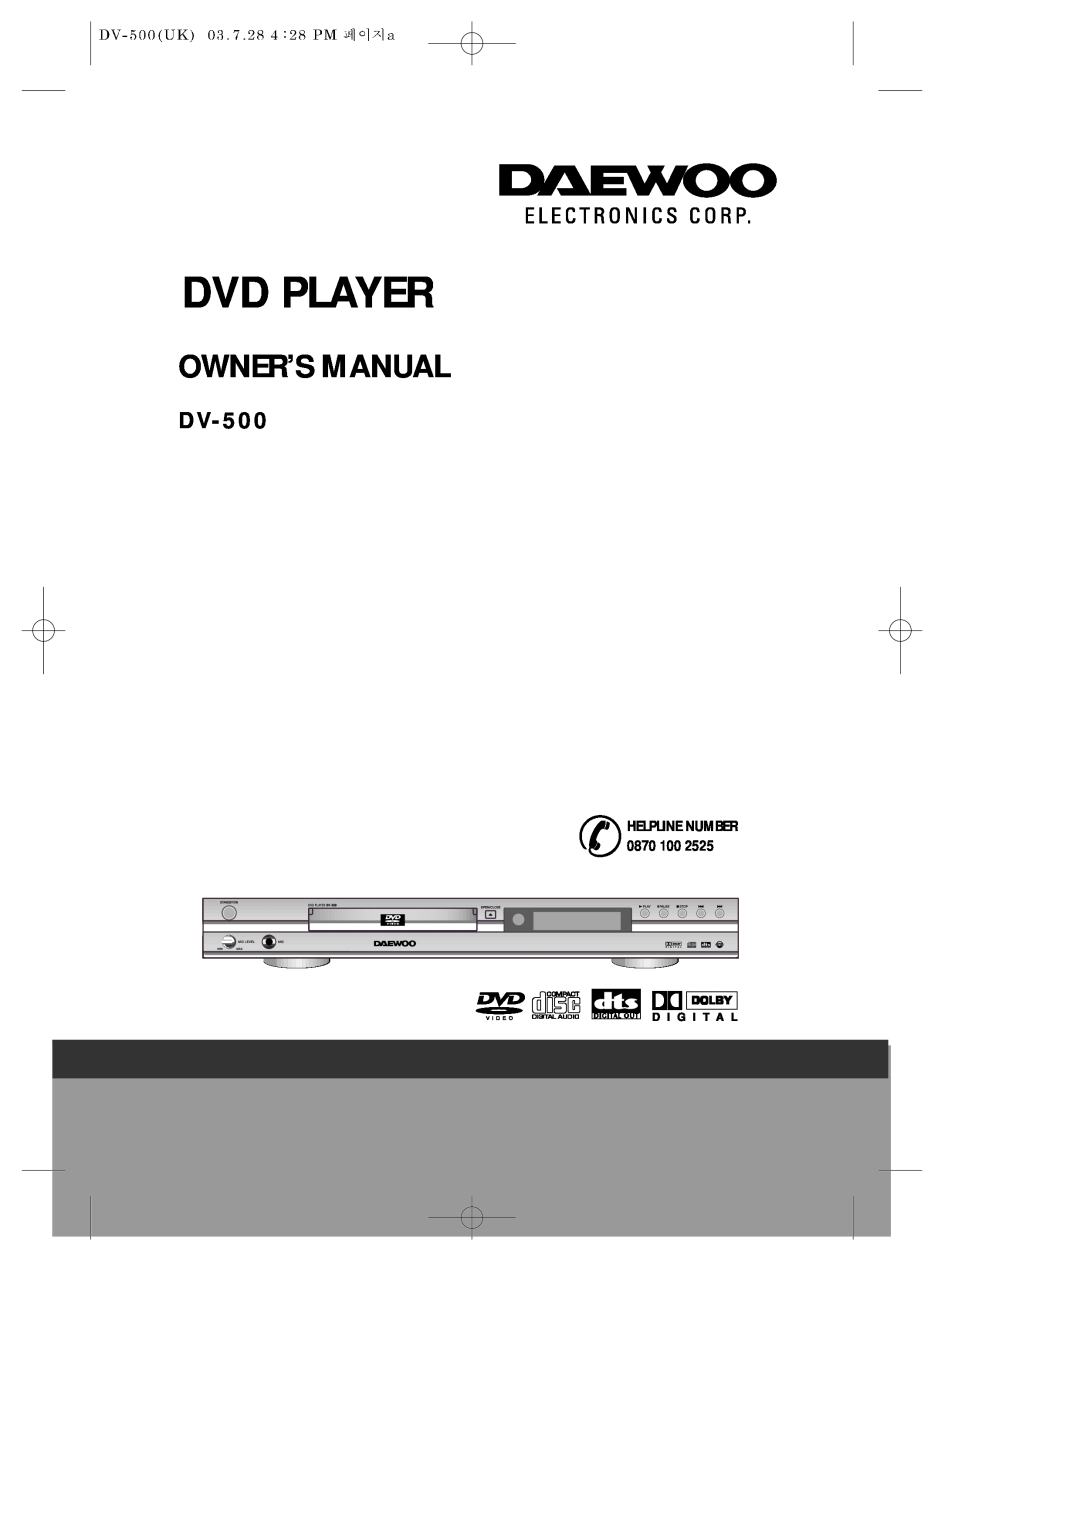 Daewoo DV-500 owner manual Owner’S Manual, Dvd Player, DV- 5 0, HELPLINE NUMBER 0870 100 